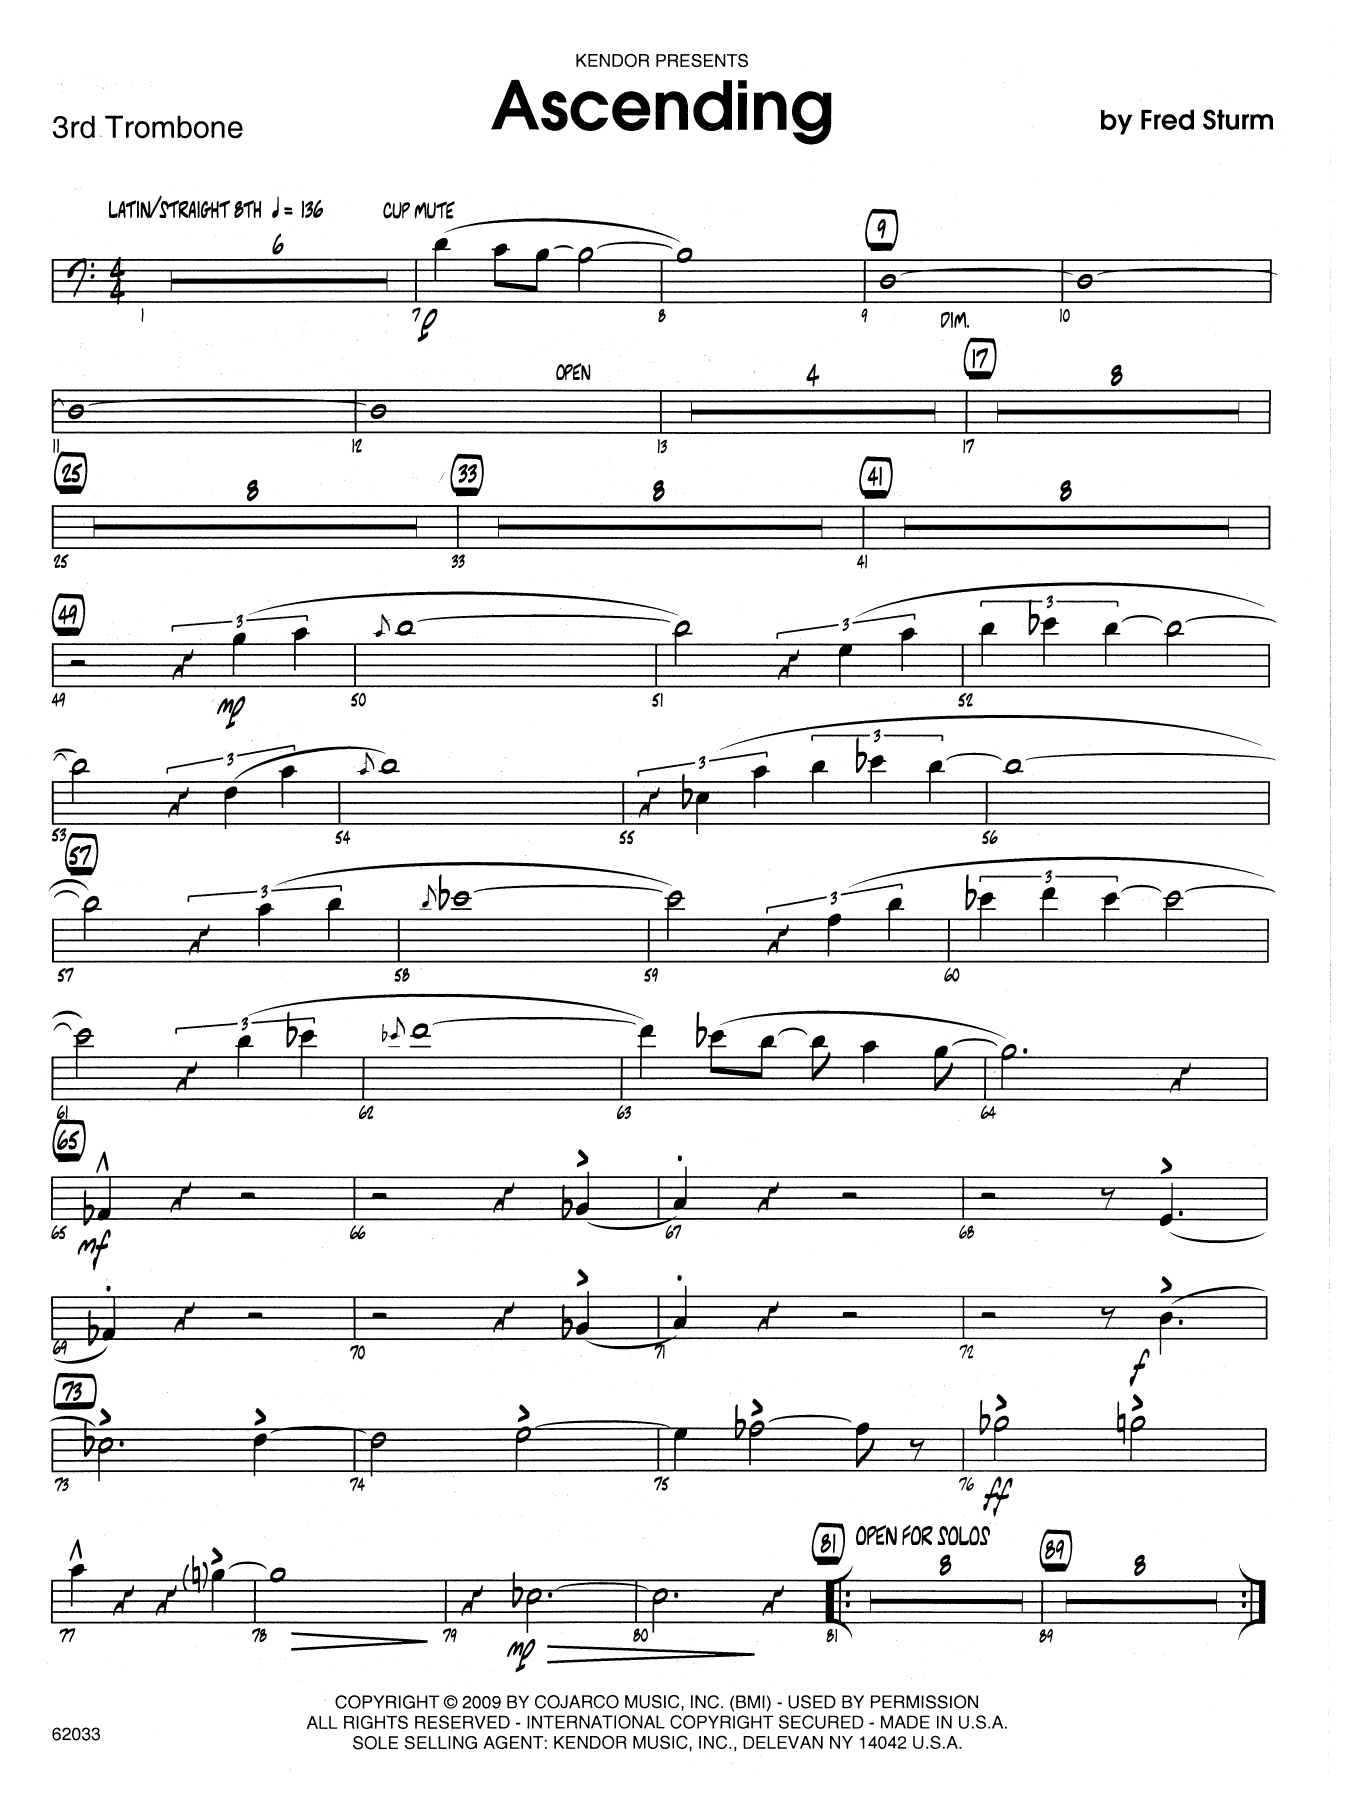 Download Fred Sturm Ascending - 3rd Trombone Sheet Music